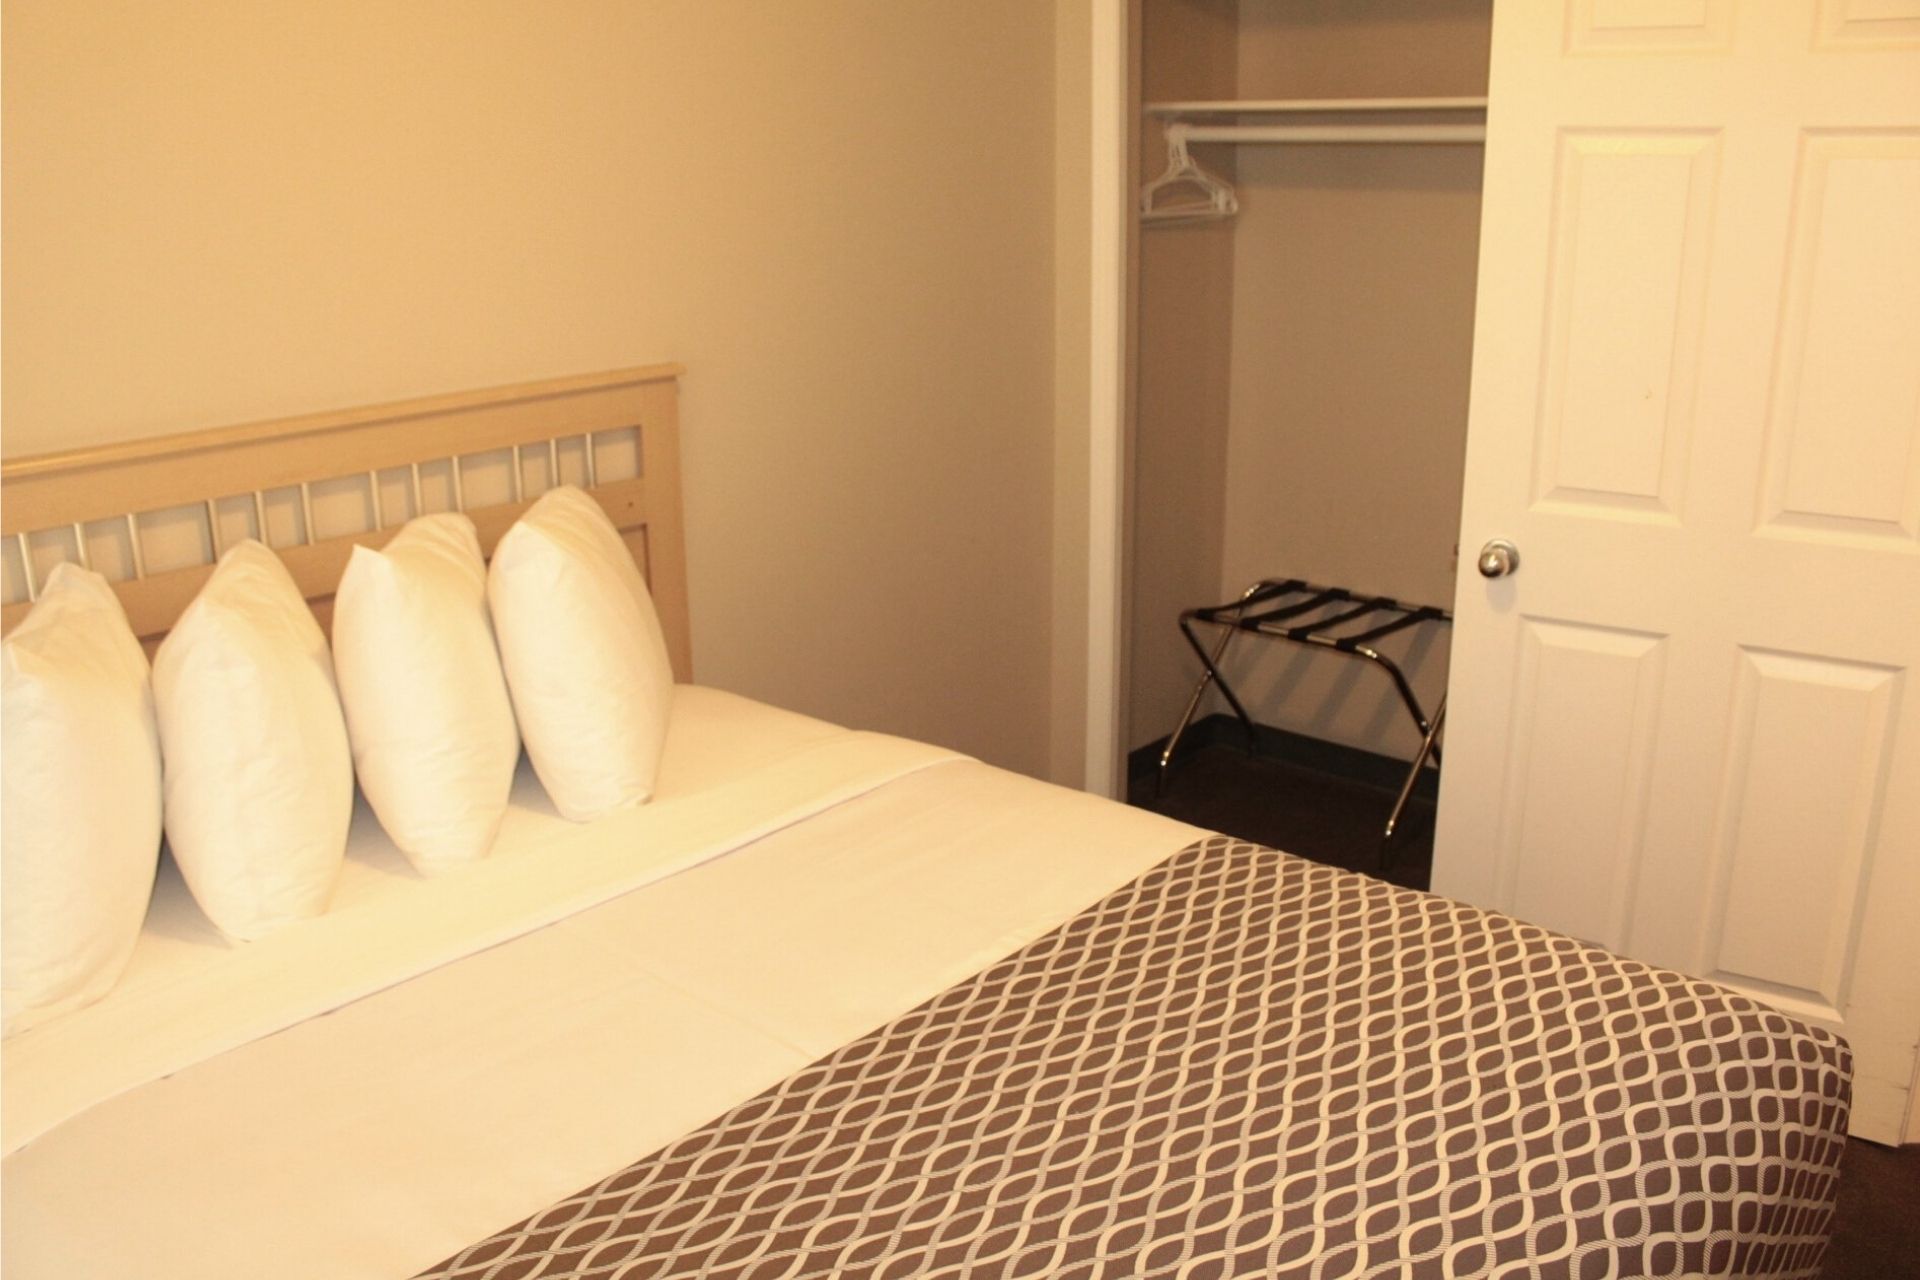 2 BEDROOM SUITE - 2 Bedroom Room with 1 Queen Bed Per Room, with Double Bed In Couch (on LaCreteInn&Suites.ca)